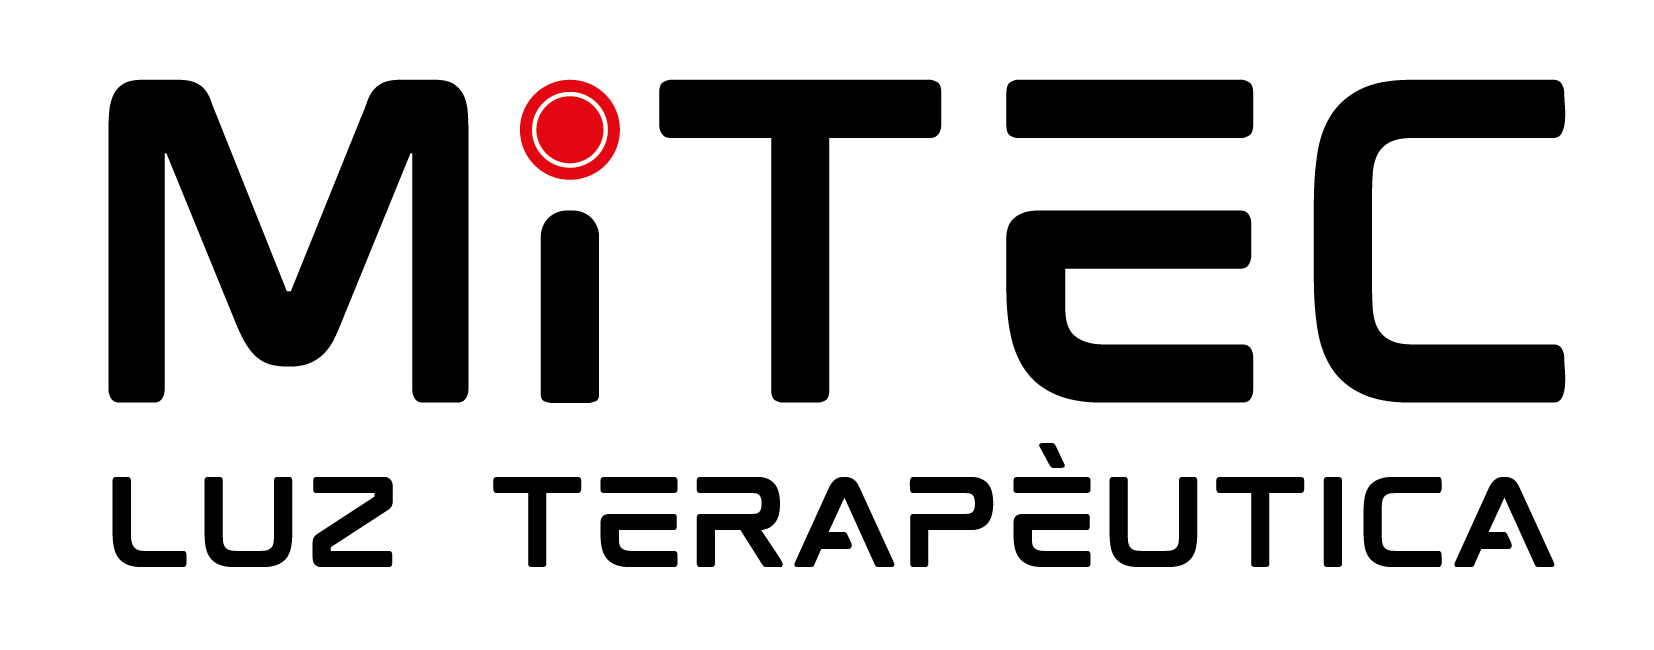 MITEC Luz Terapèutica Logotipo Fondo Blanco 300dpi(1)